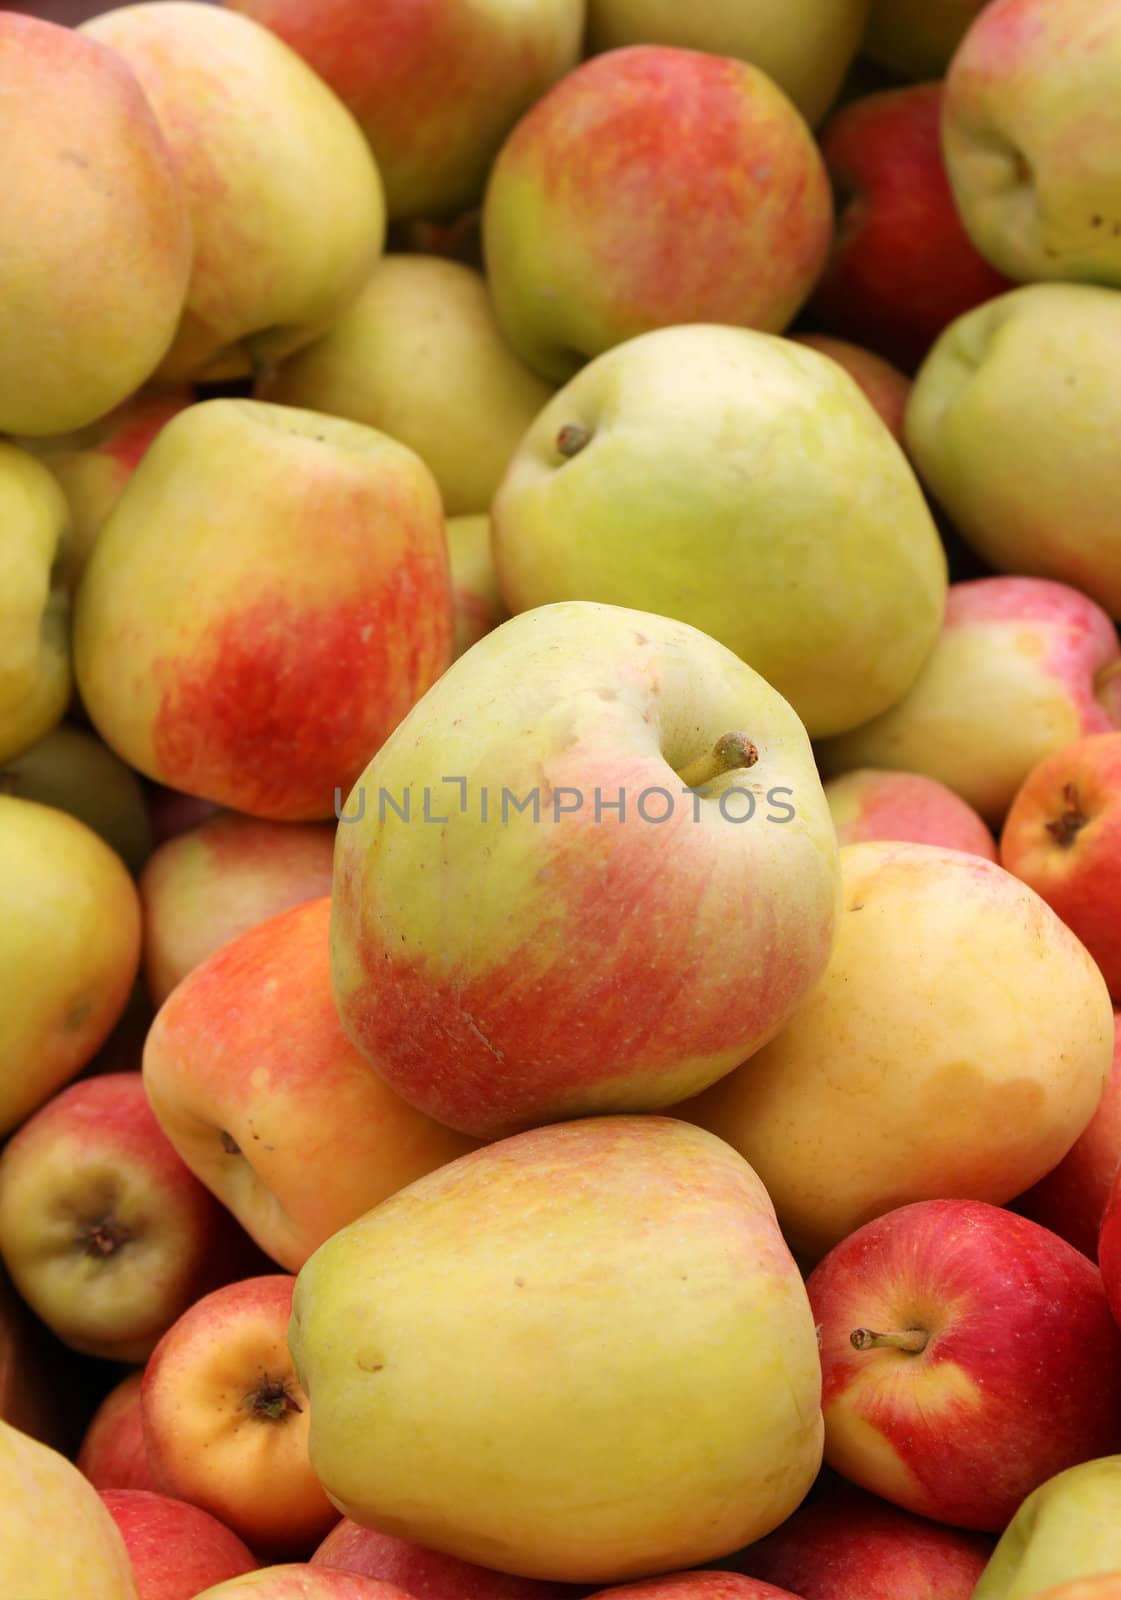 ripe fresh apples by irisphoto4